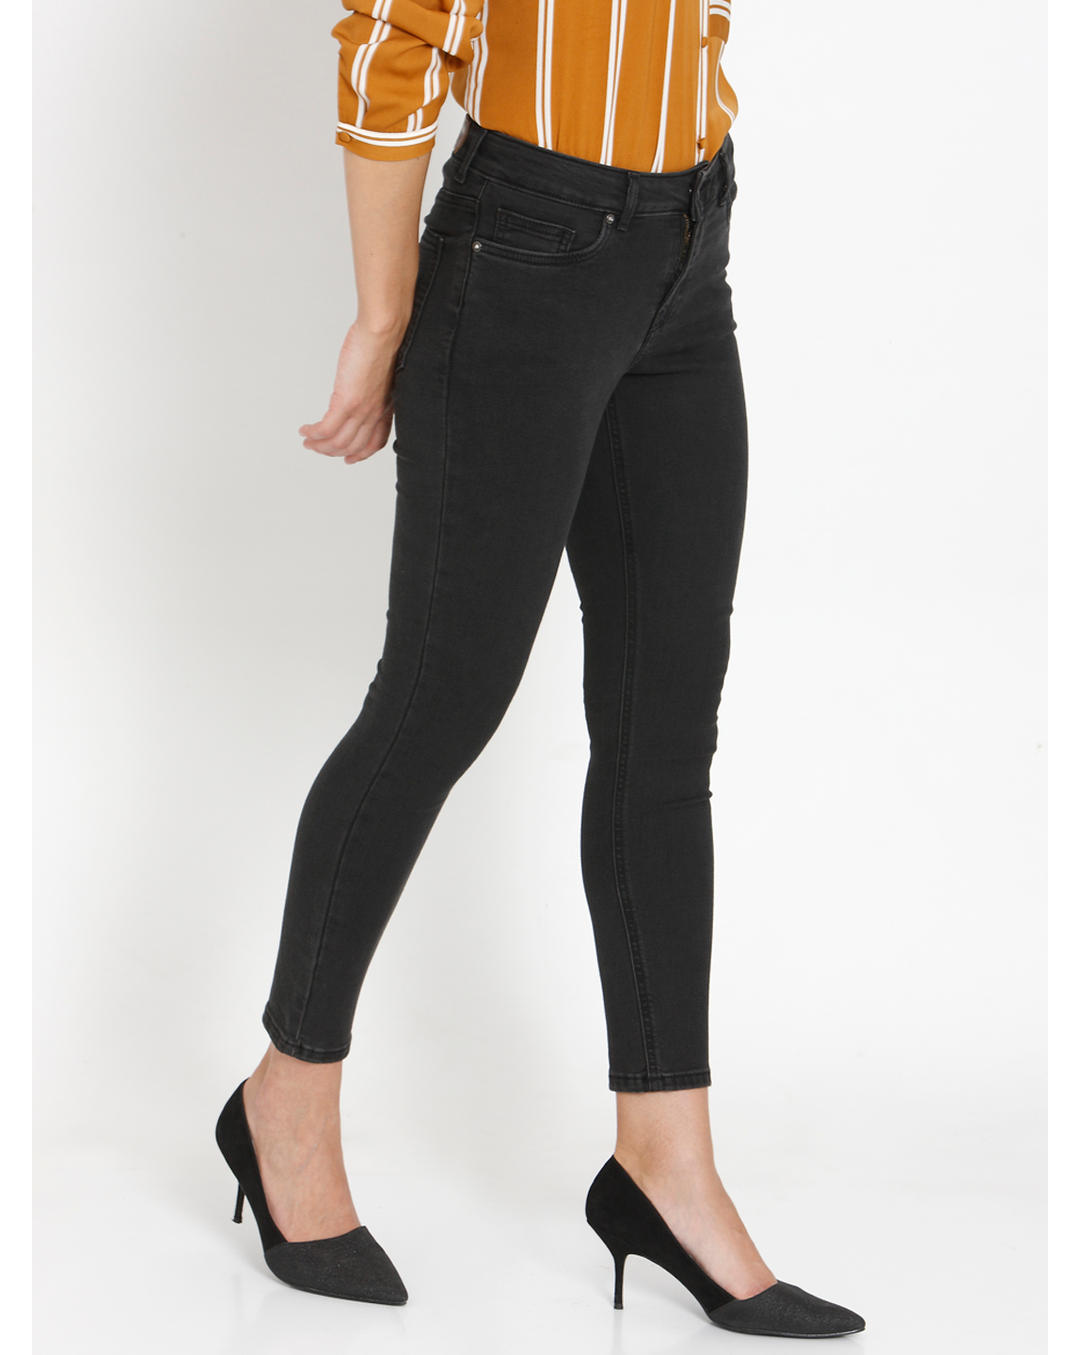 Buy Women Dark Grey Mid Rise Faded Skinny Fit Jeans Online